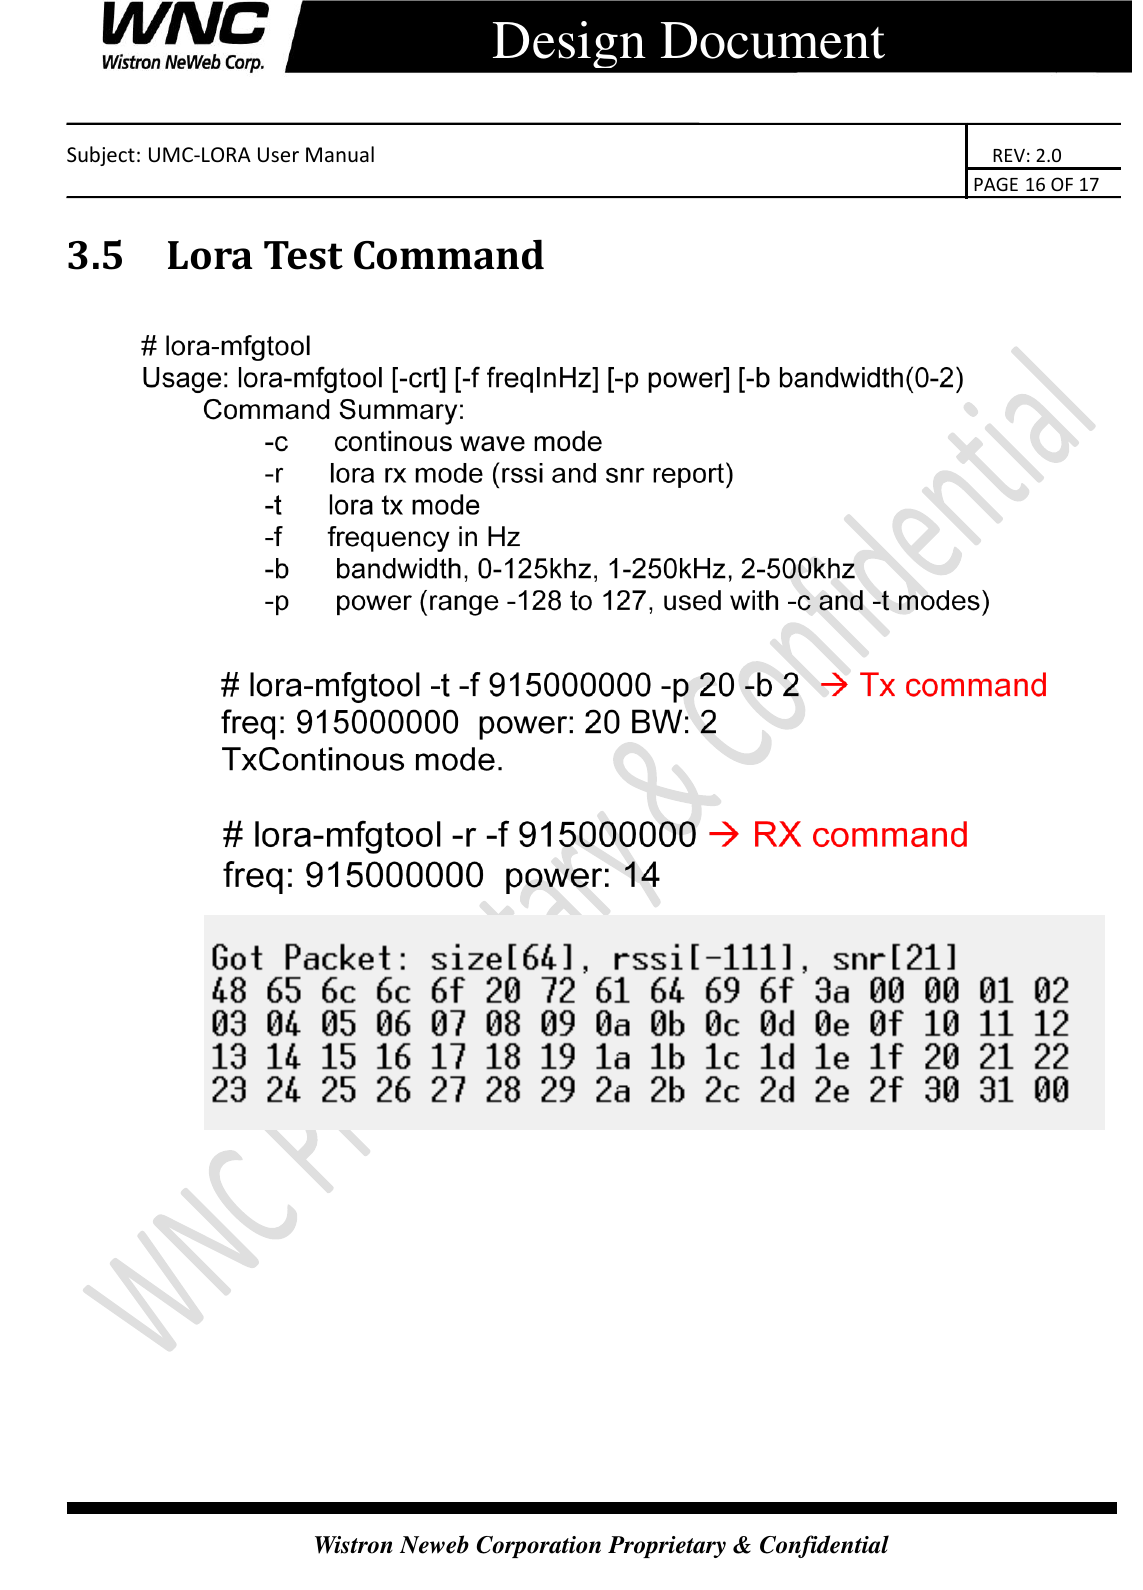    Subject: UMC-LORA User Manual                                                                      REV: 2.0                                                                                        PAGE 16 OF 17  Wistron Neweb Corporation Proprietary &amp; Confidential      Design Document 3.5 Lora Test Command       